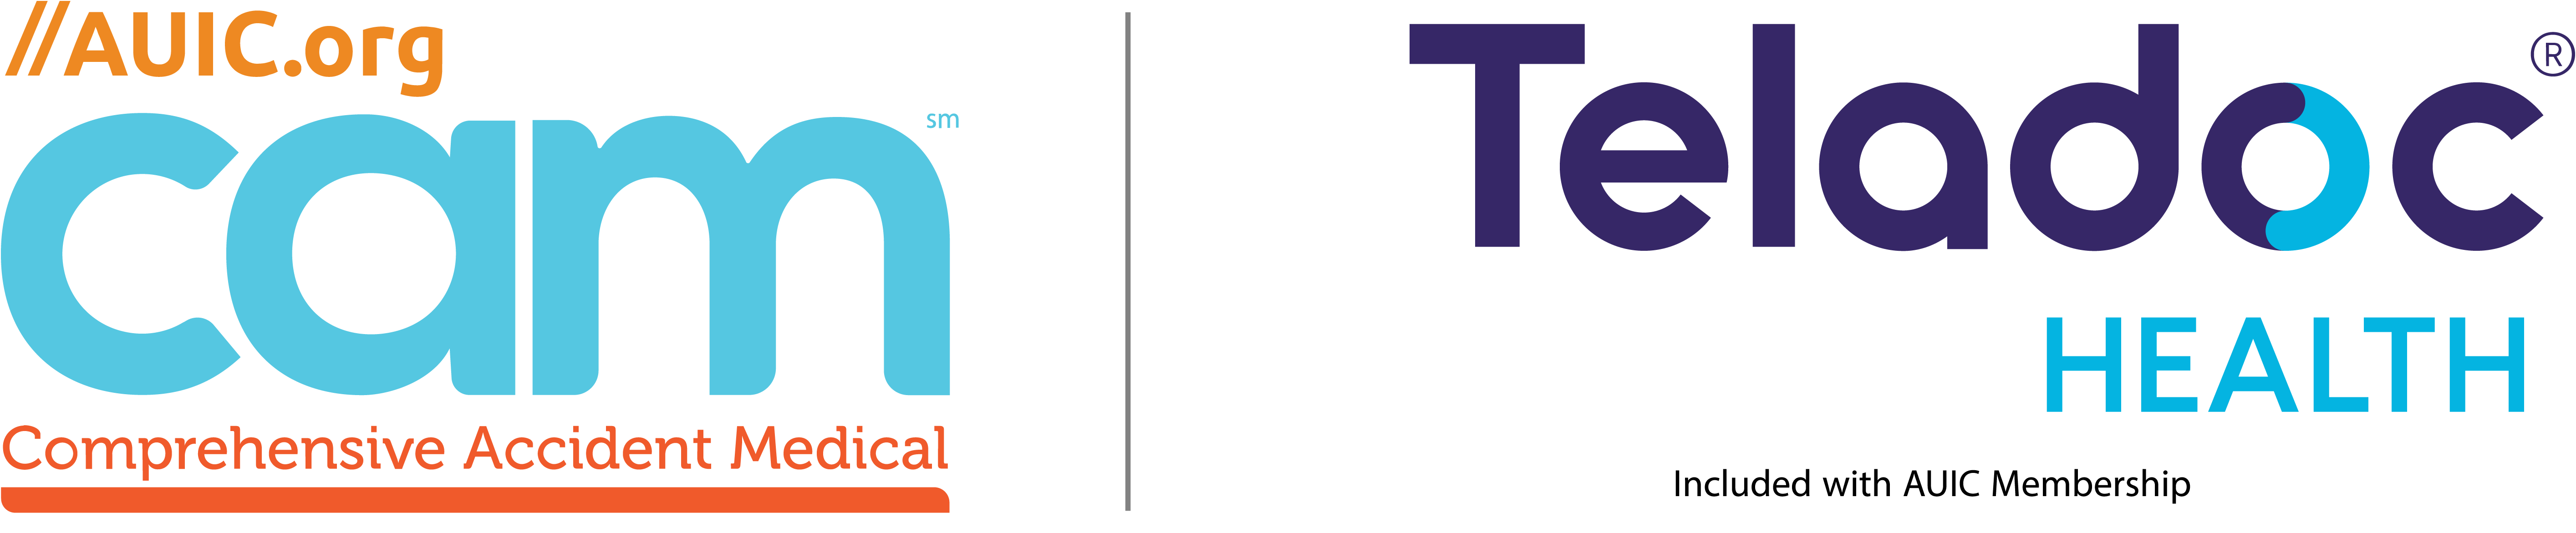 cam with Teladoc logo